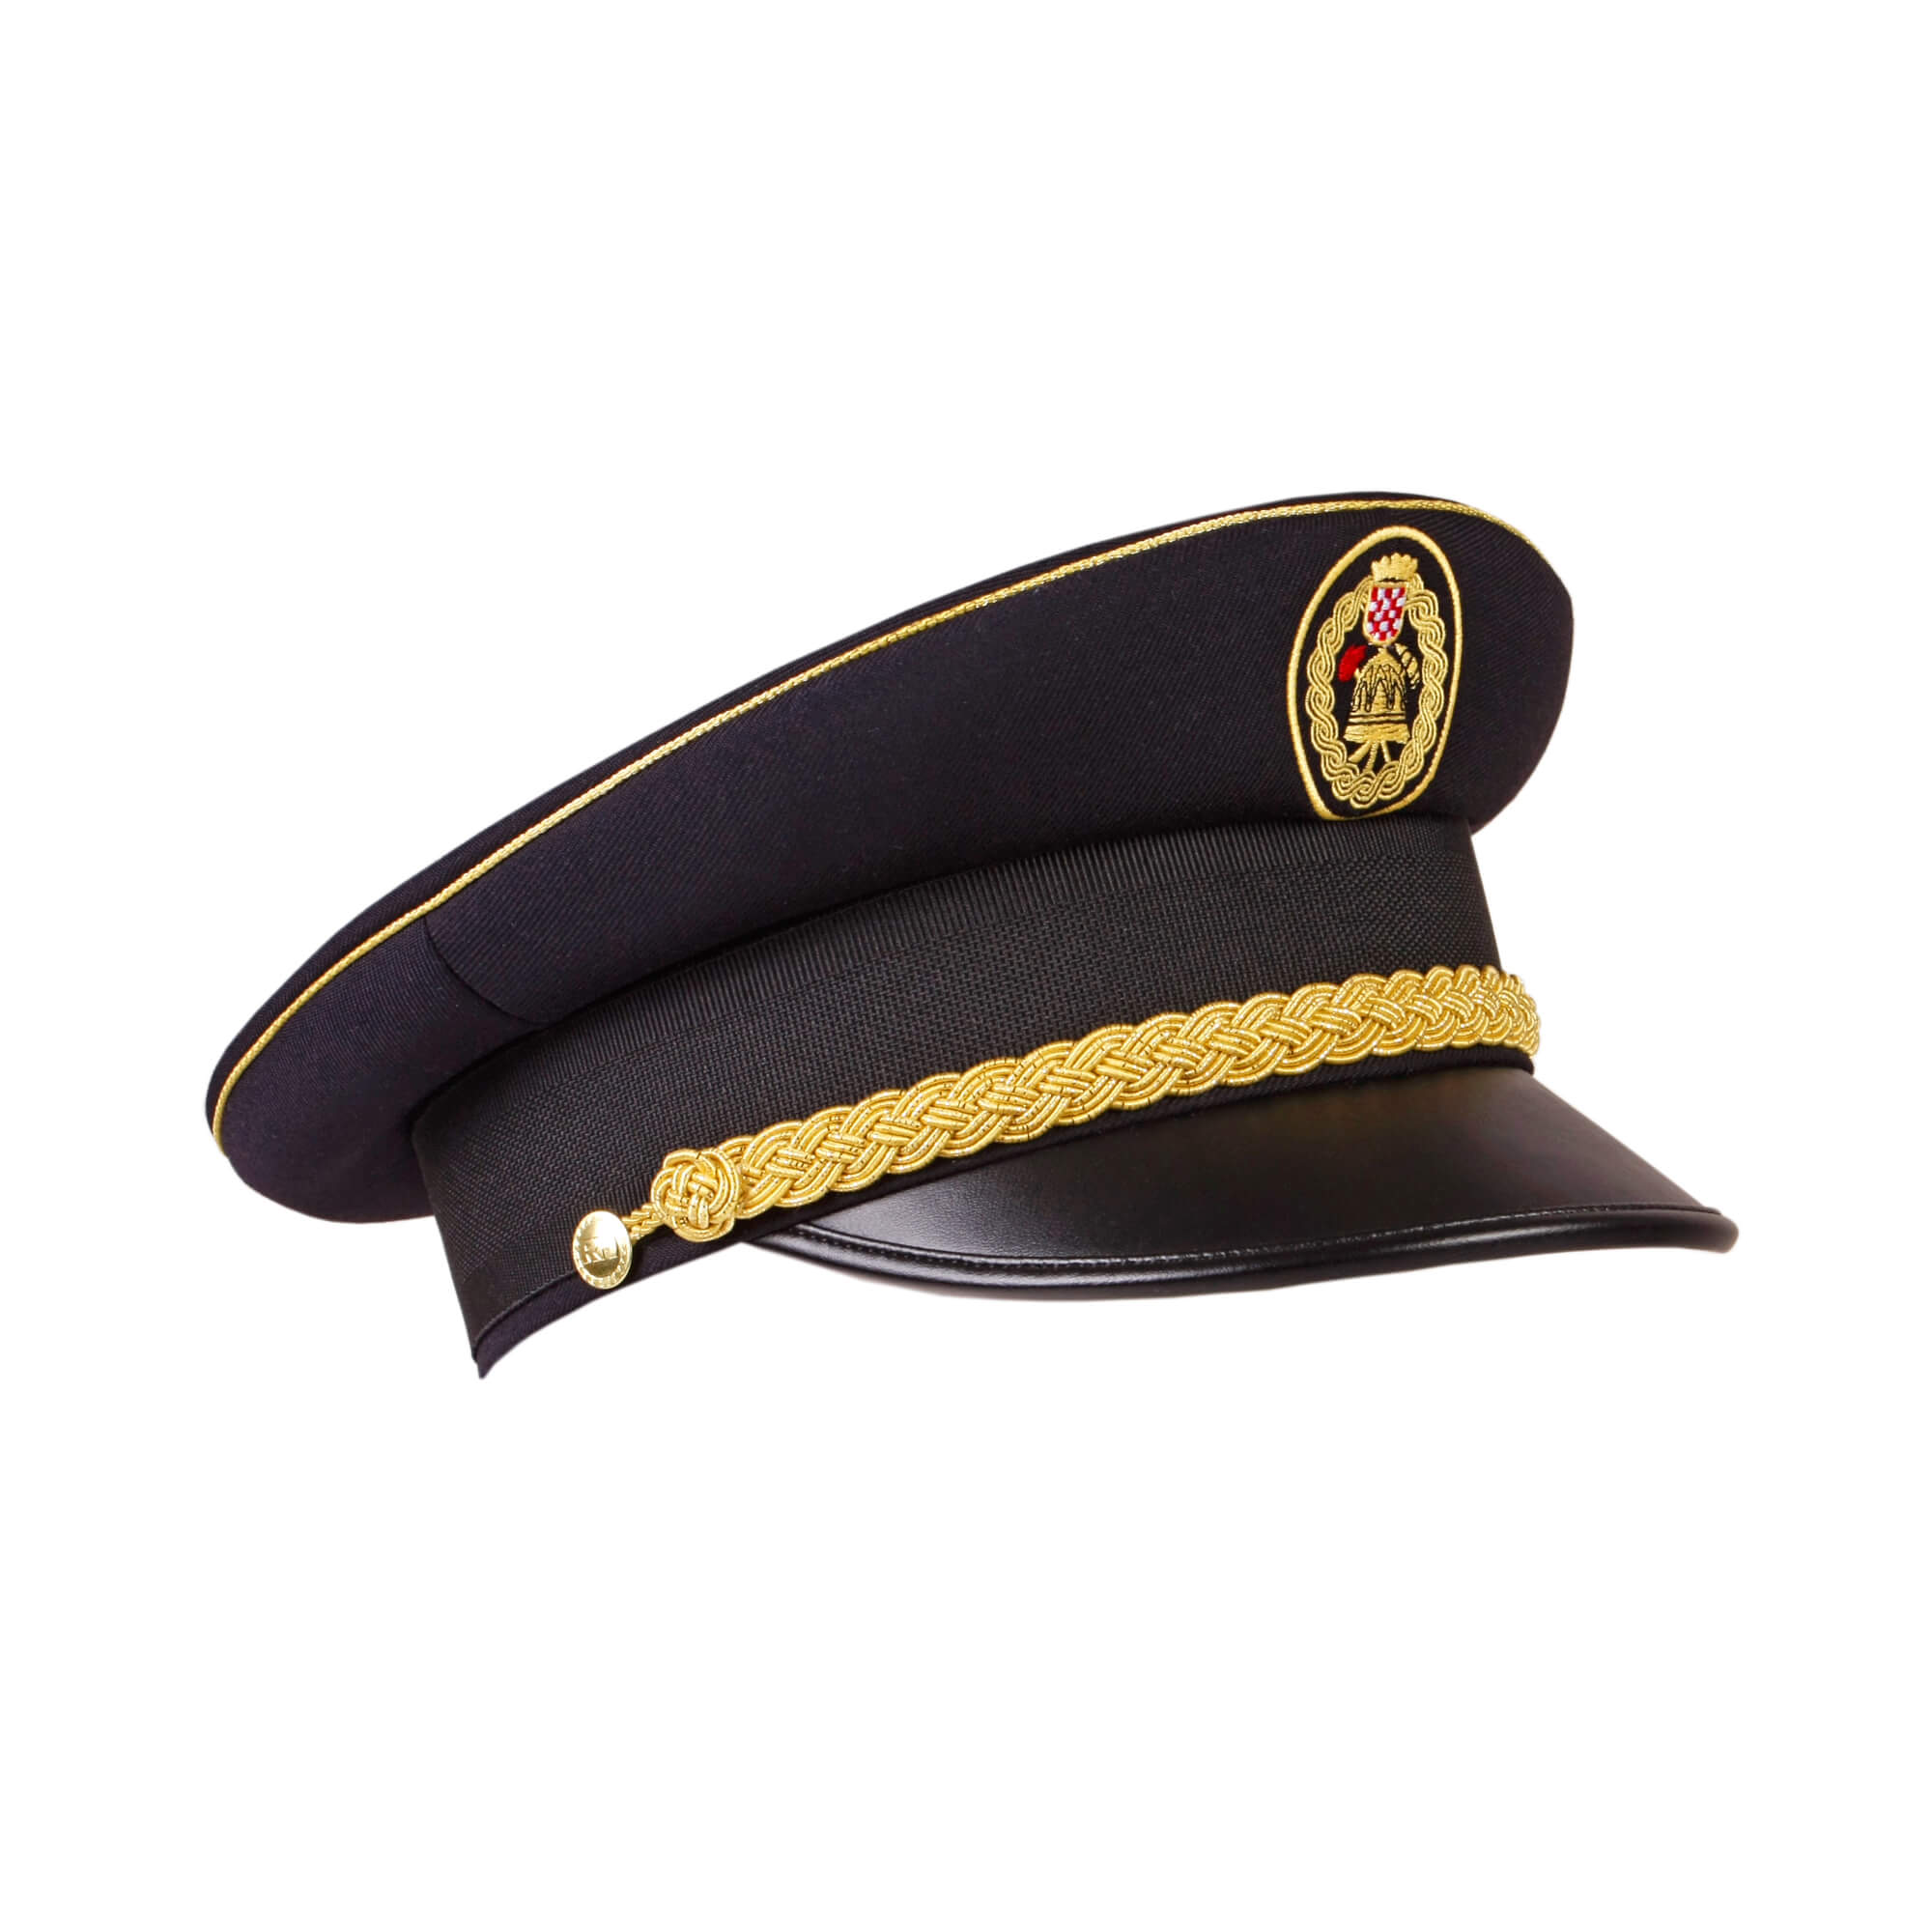 Firefighter Formal Cap, Officer